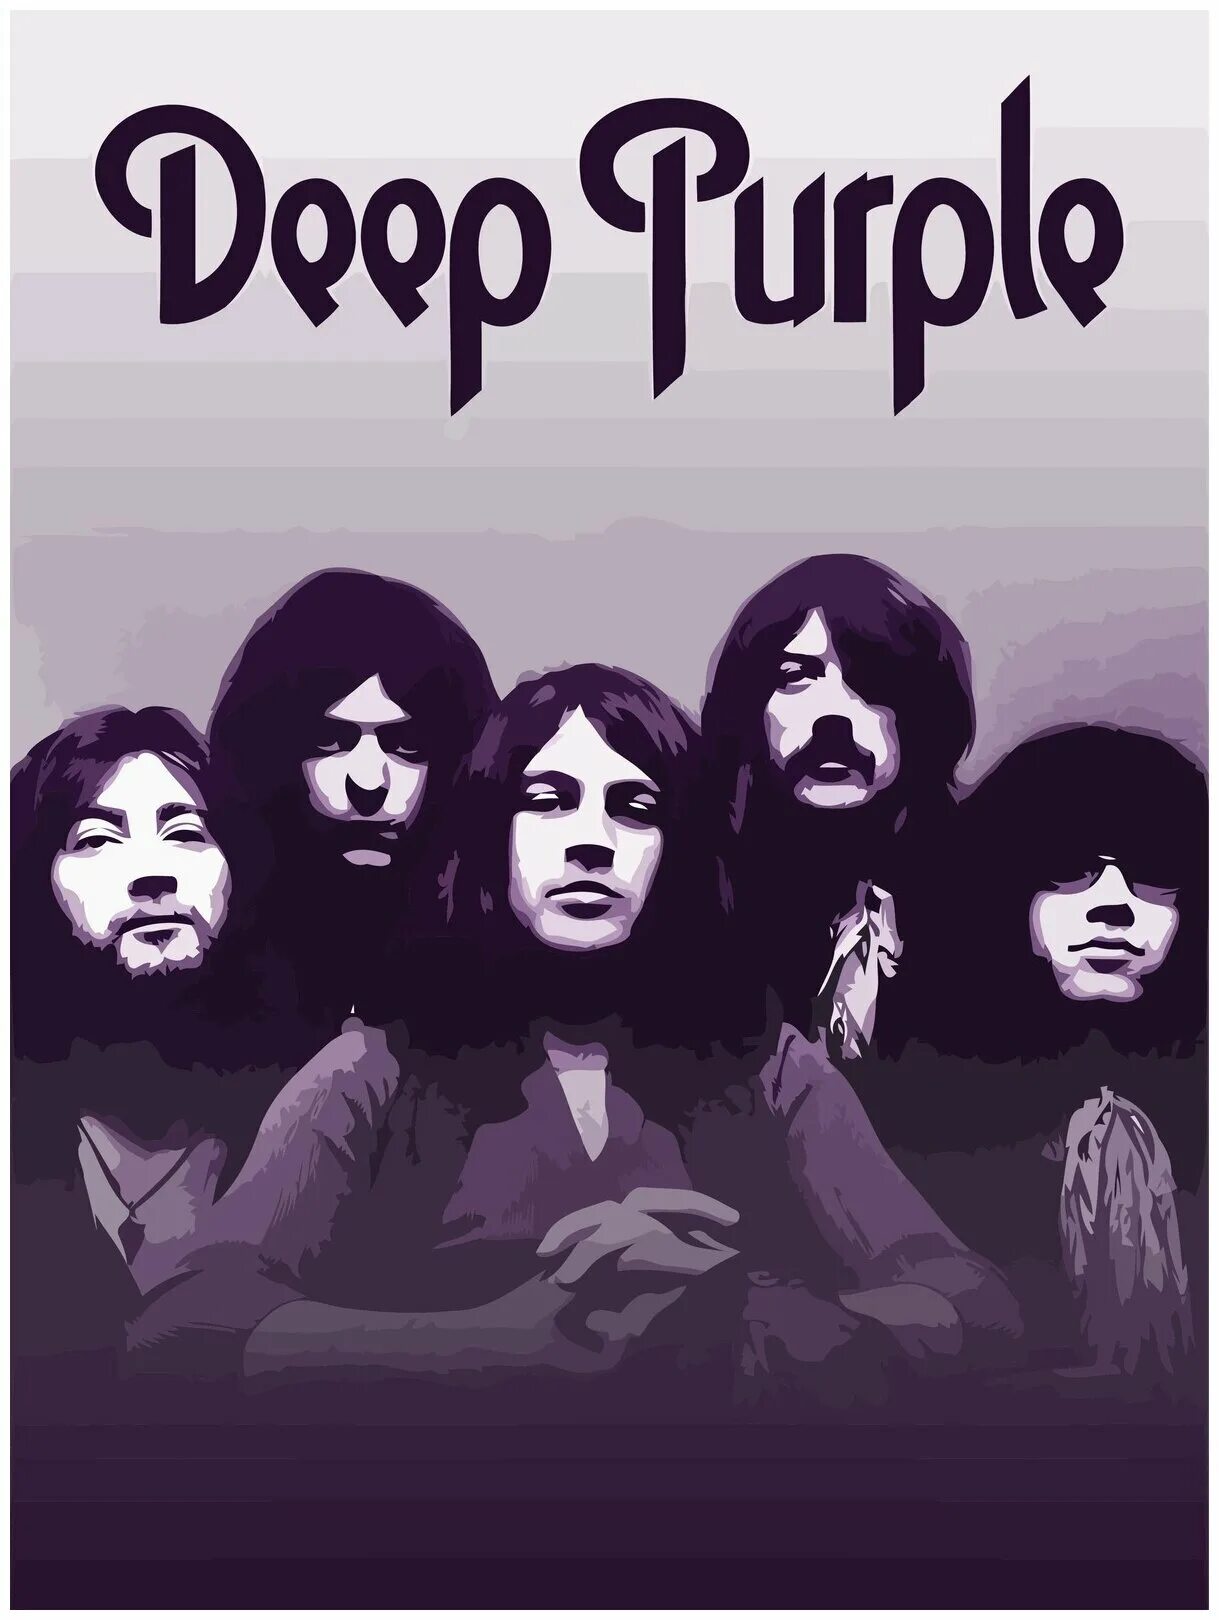 Ди перпл. Группа дип перпл. Постер группы дип перпл. Постеры группы Deep Purple. Группа Deep Purple 1970.